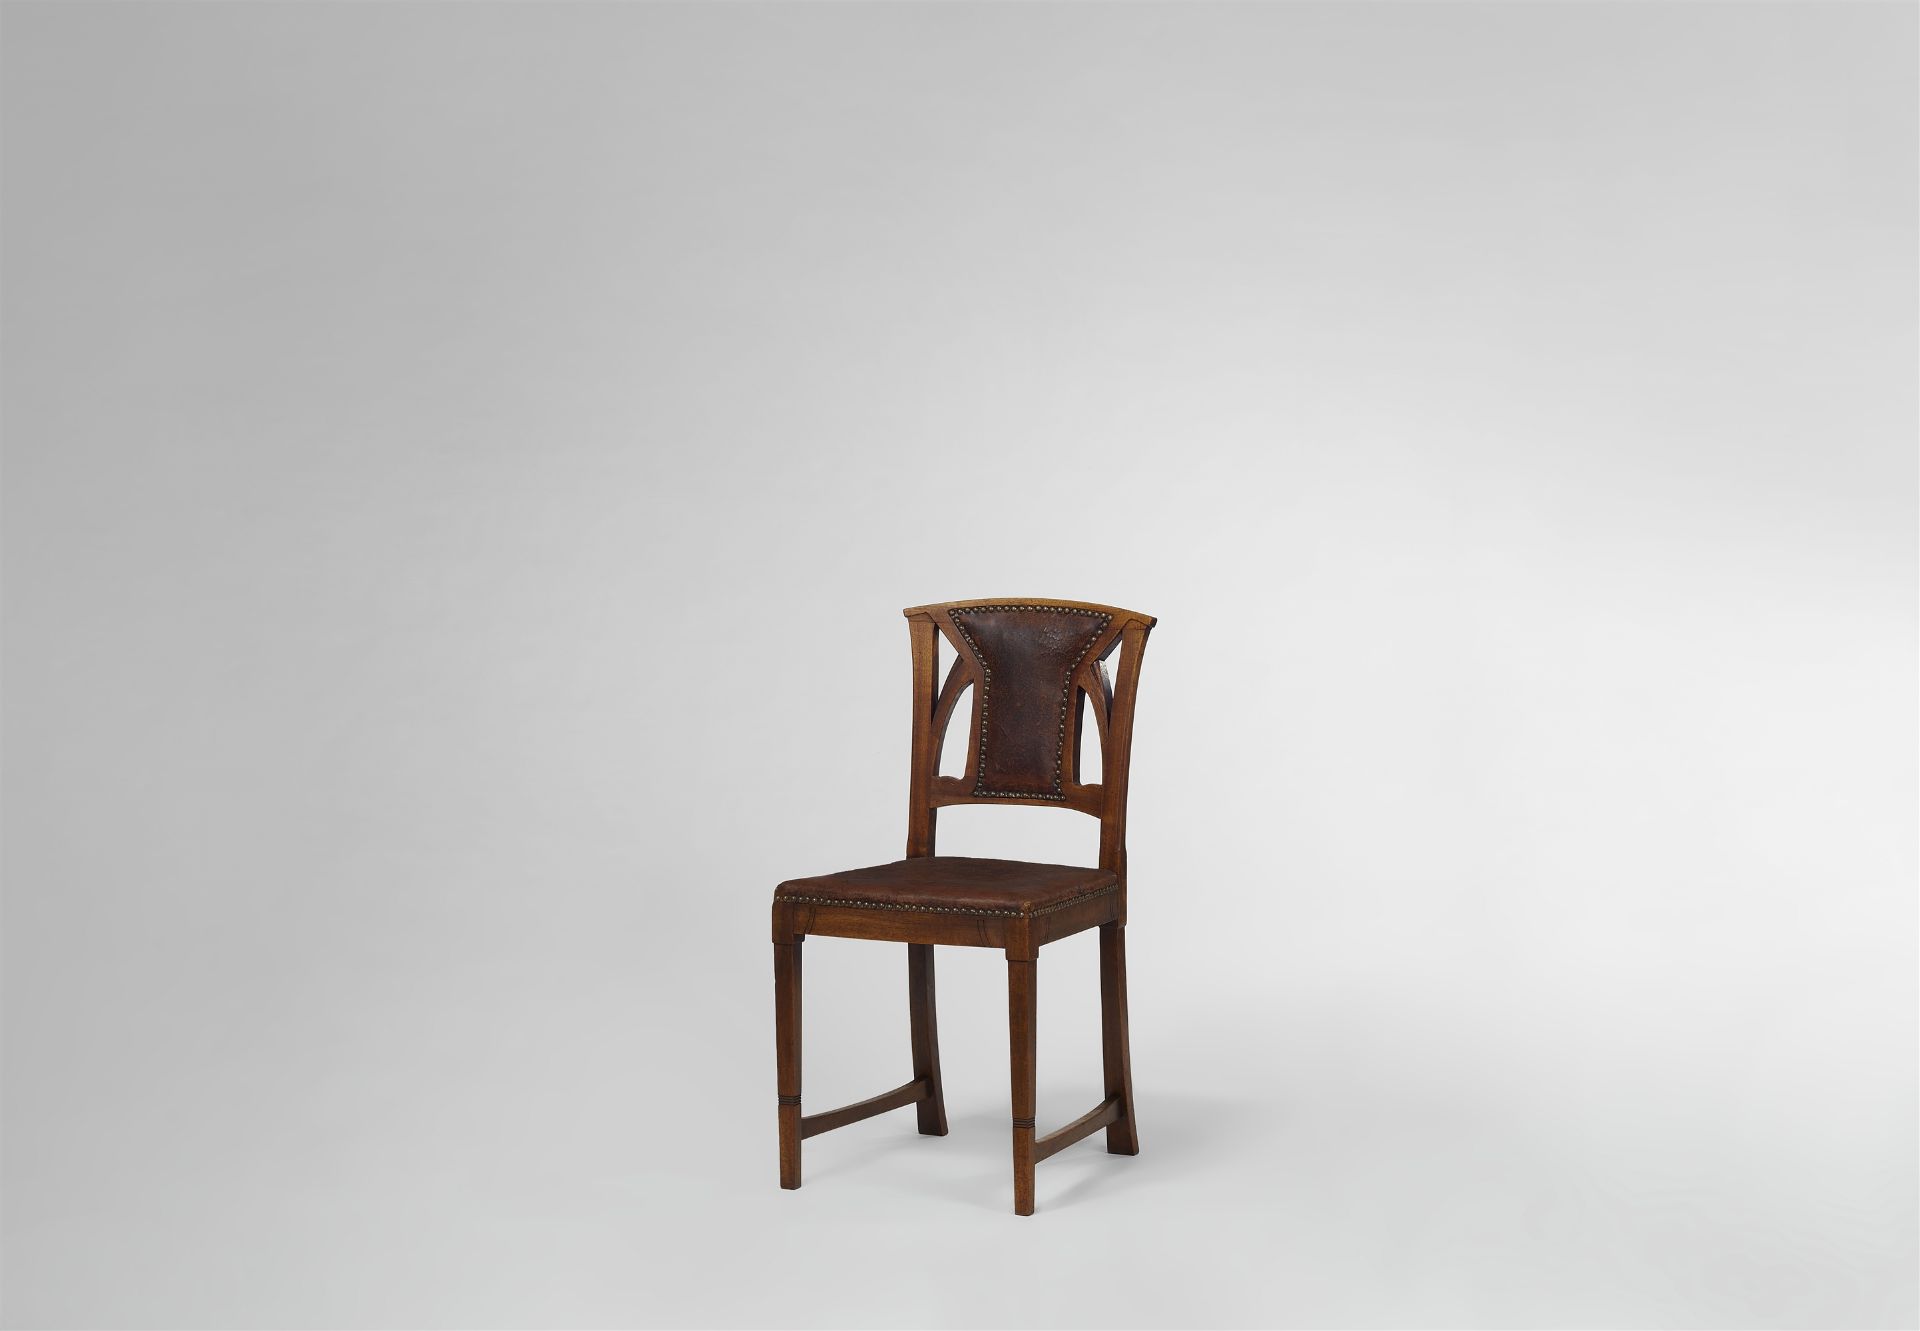 Chair from the circle of Henry van de Velde